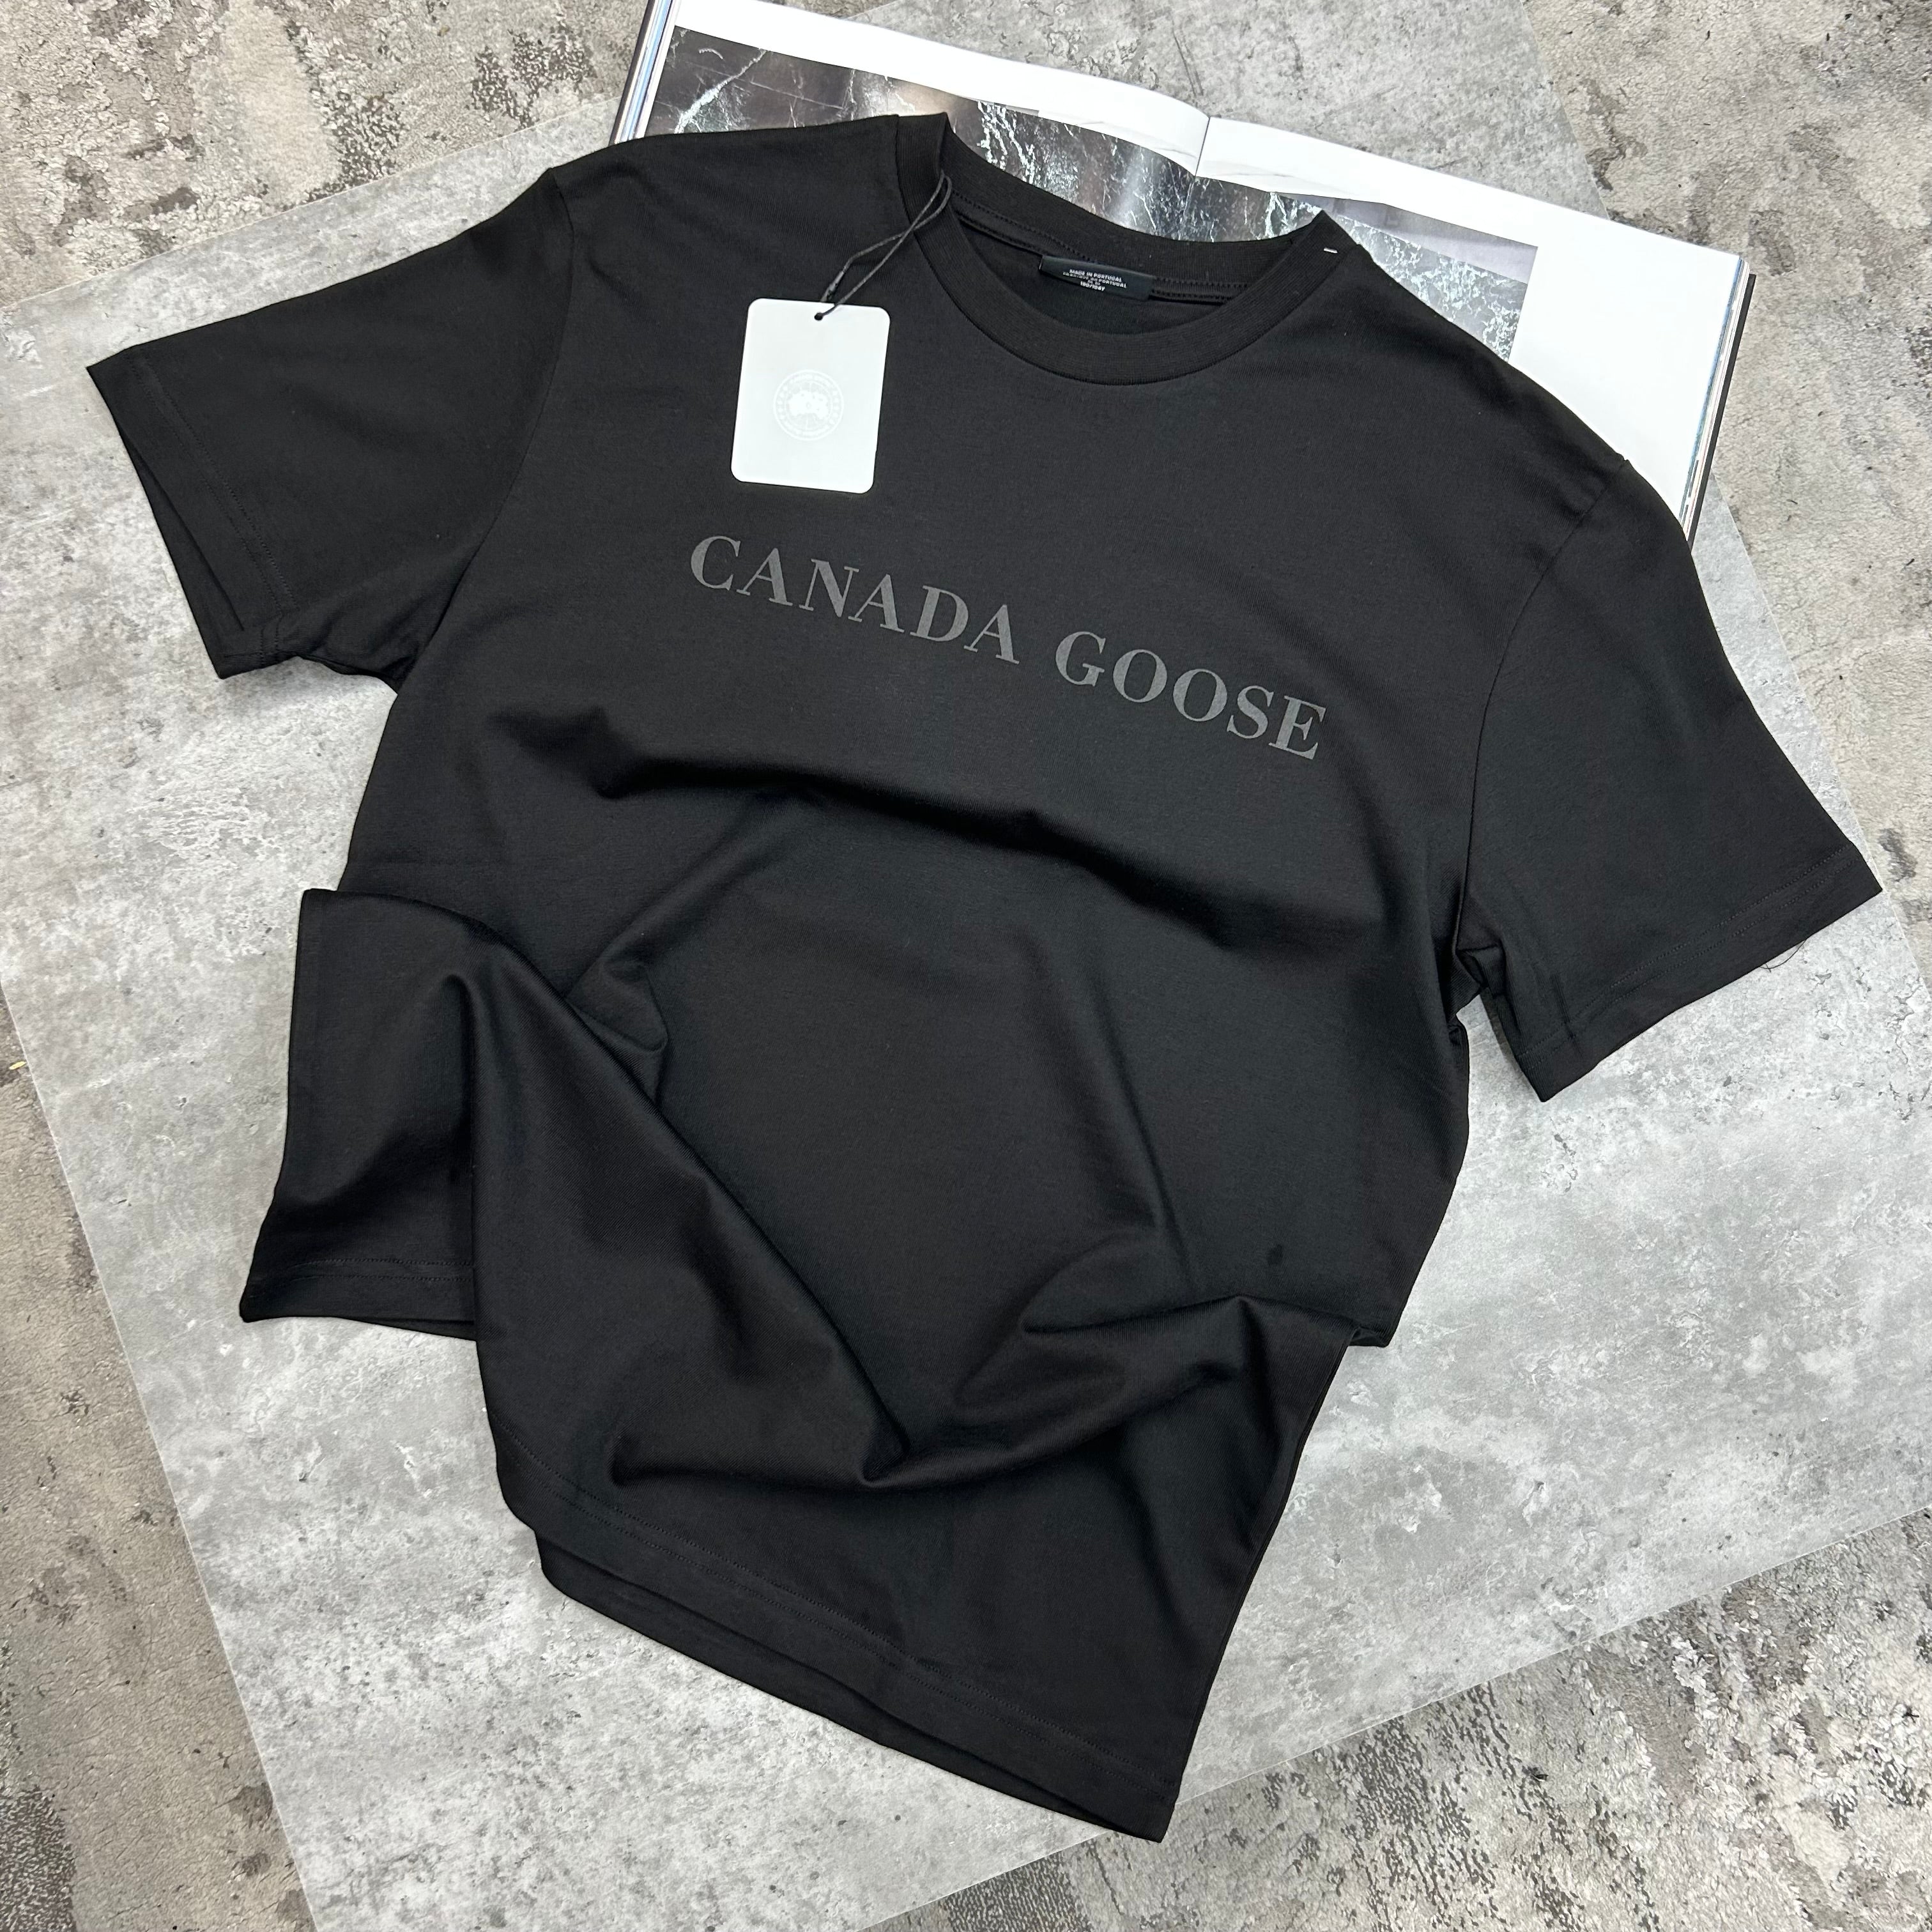 CANADA GOOSE - T-SHIRT - BLACK